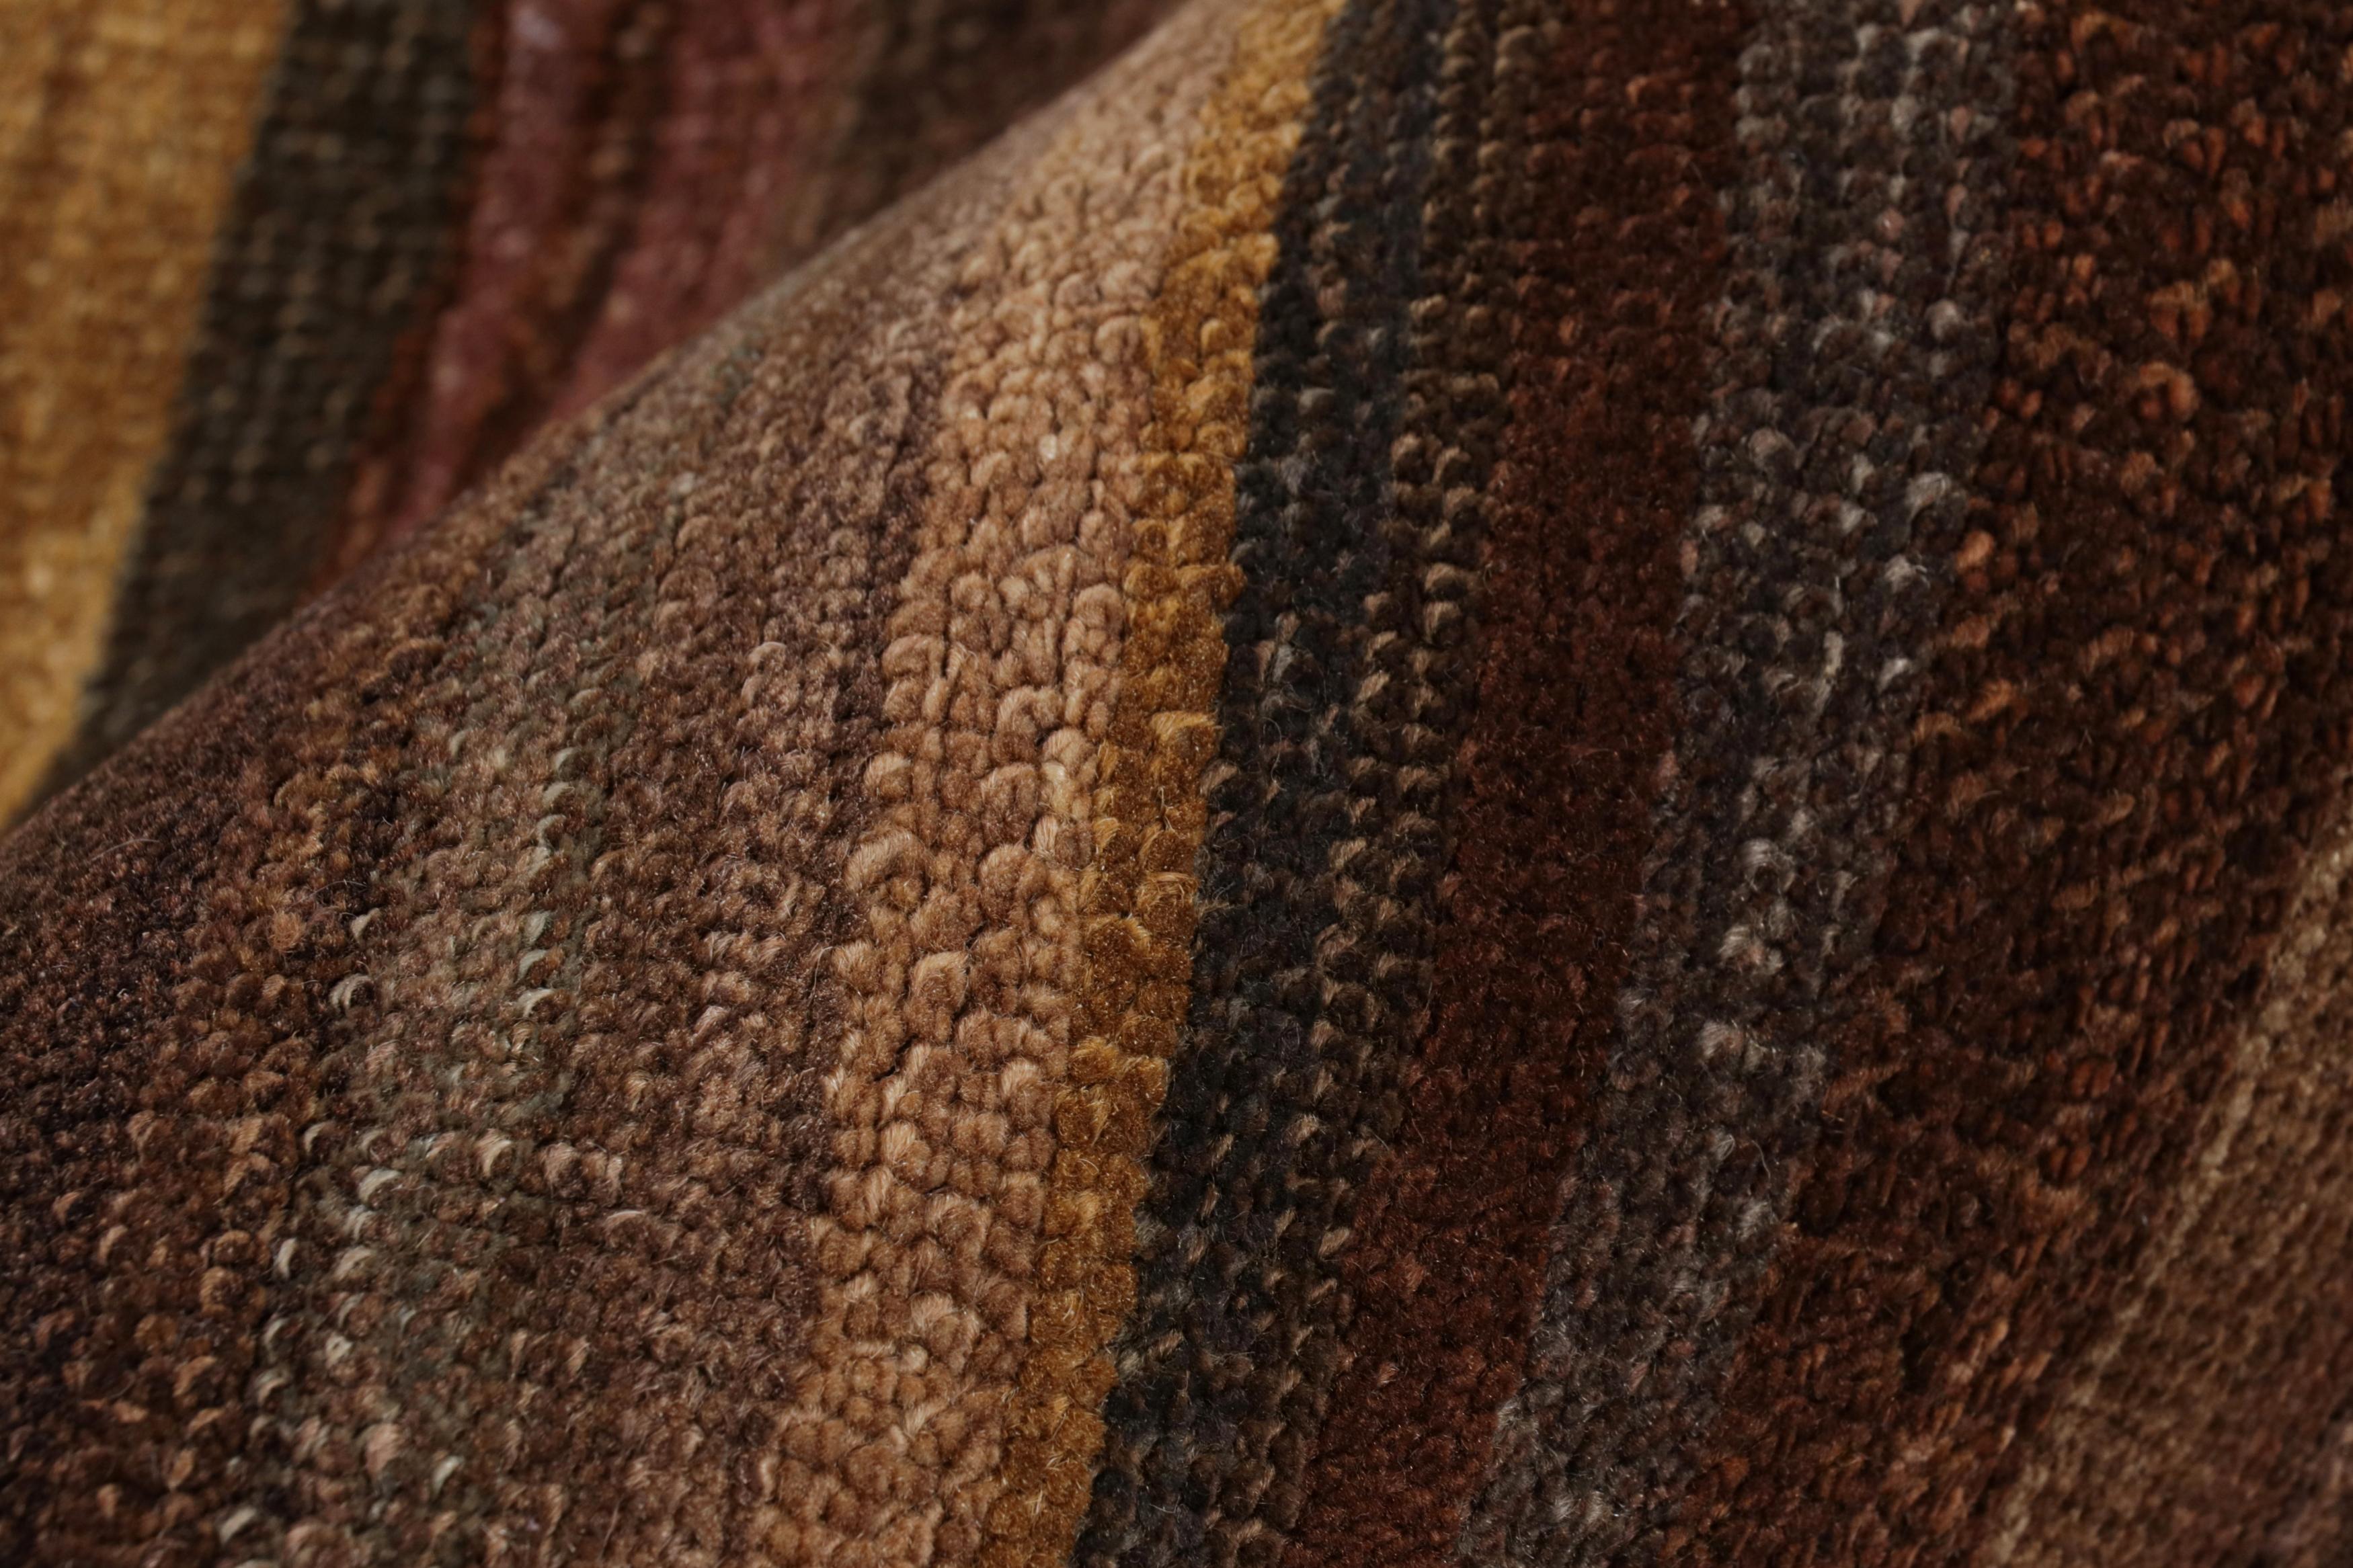 Rug & Kilim's Modern Modern Textural Rug in Rich Brown Stripes and Umber Tones (Tapis à rayures marron et tons ambrés)